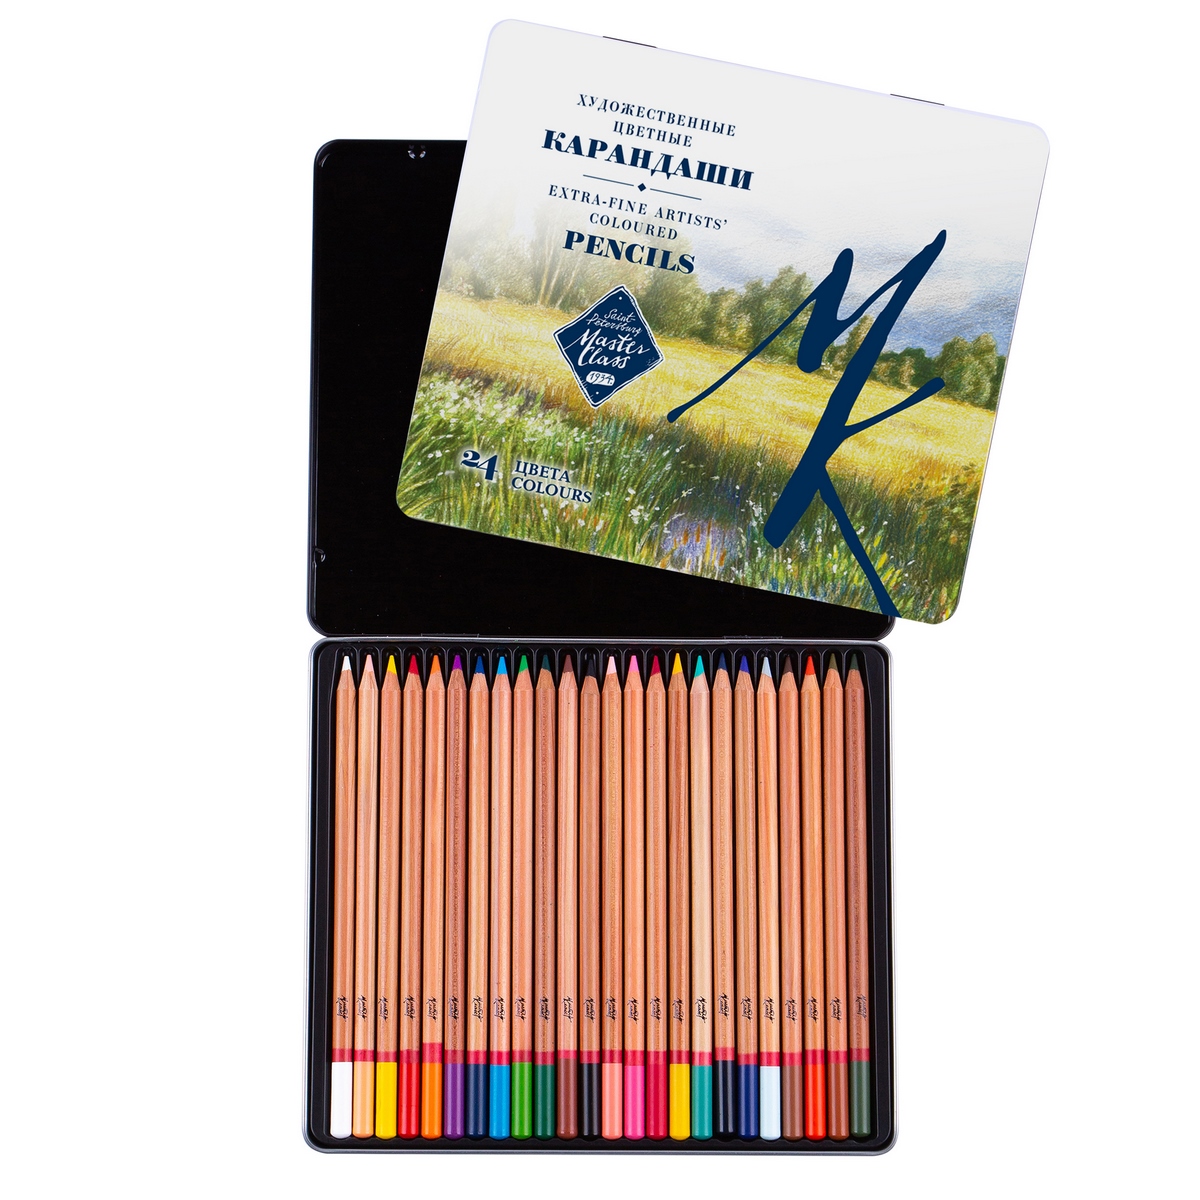 Extra-fine artists' coloured pencils "Master Class" set, tin box